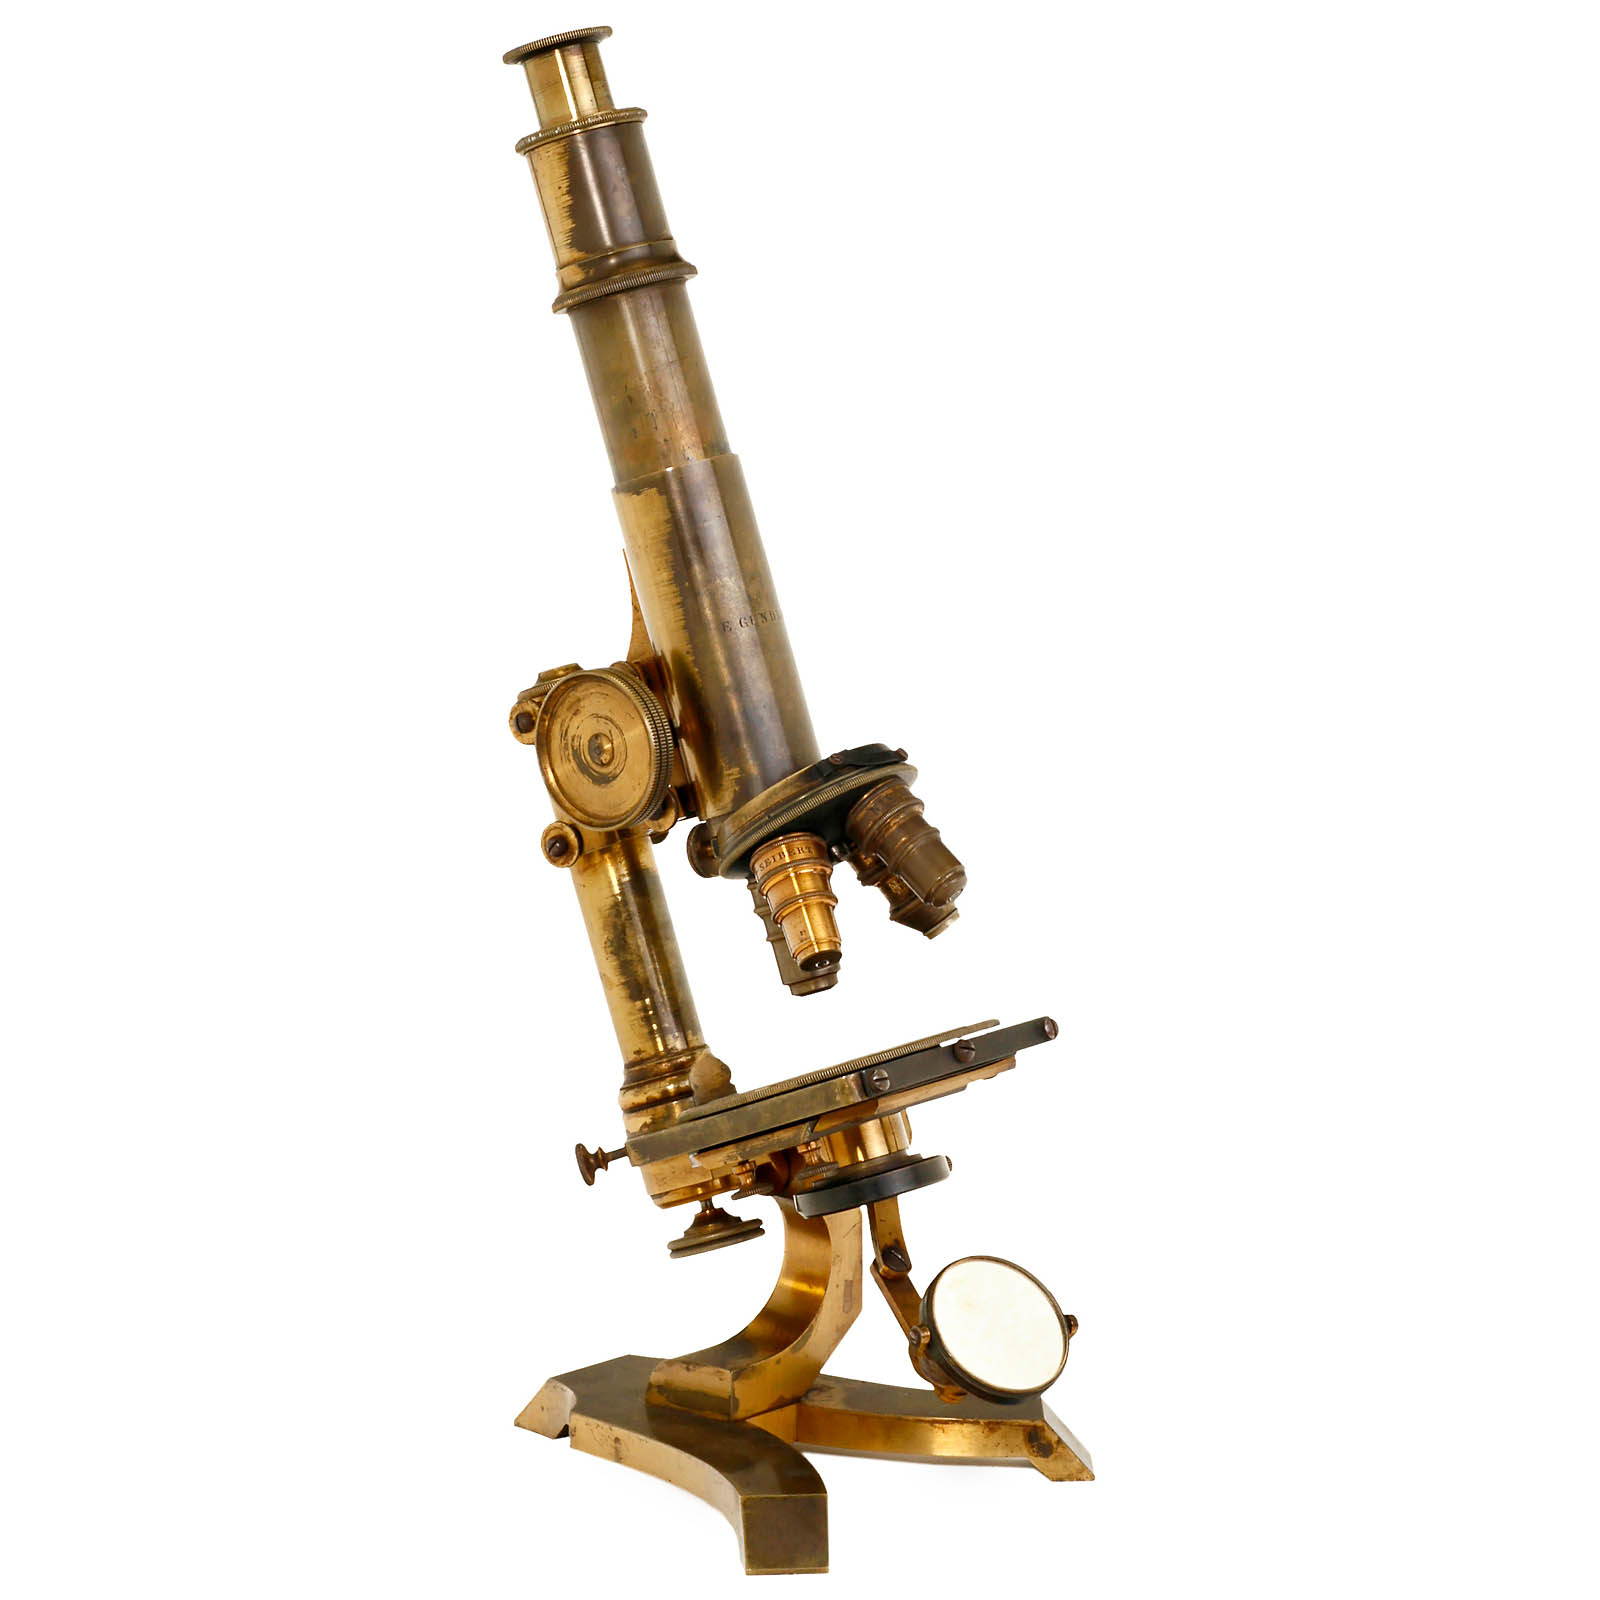 Rare Berlin Compound Microscope by Gundlach, c. 1870
Signed on the tube: "E. Gundlach", original